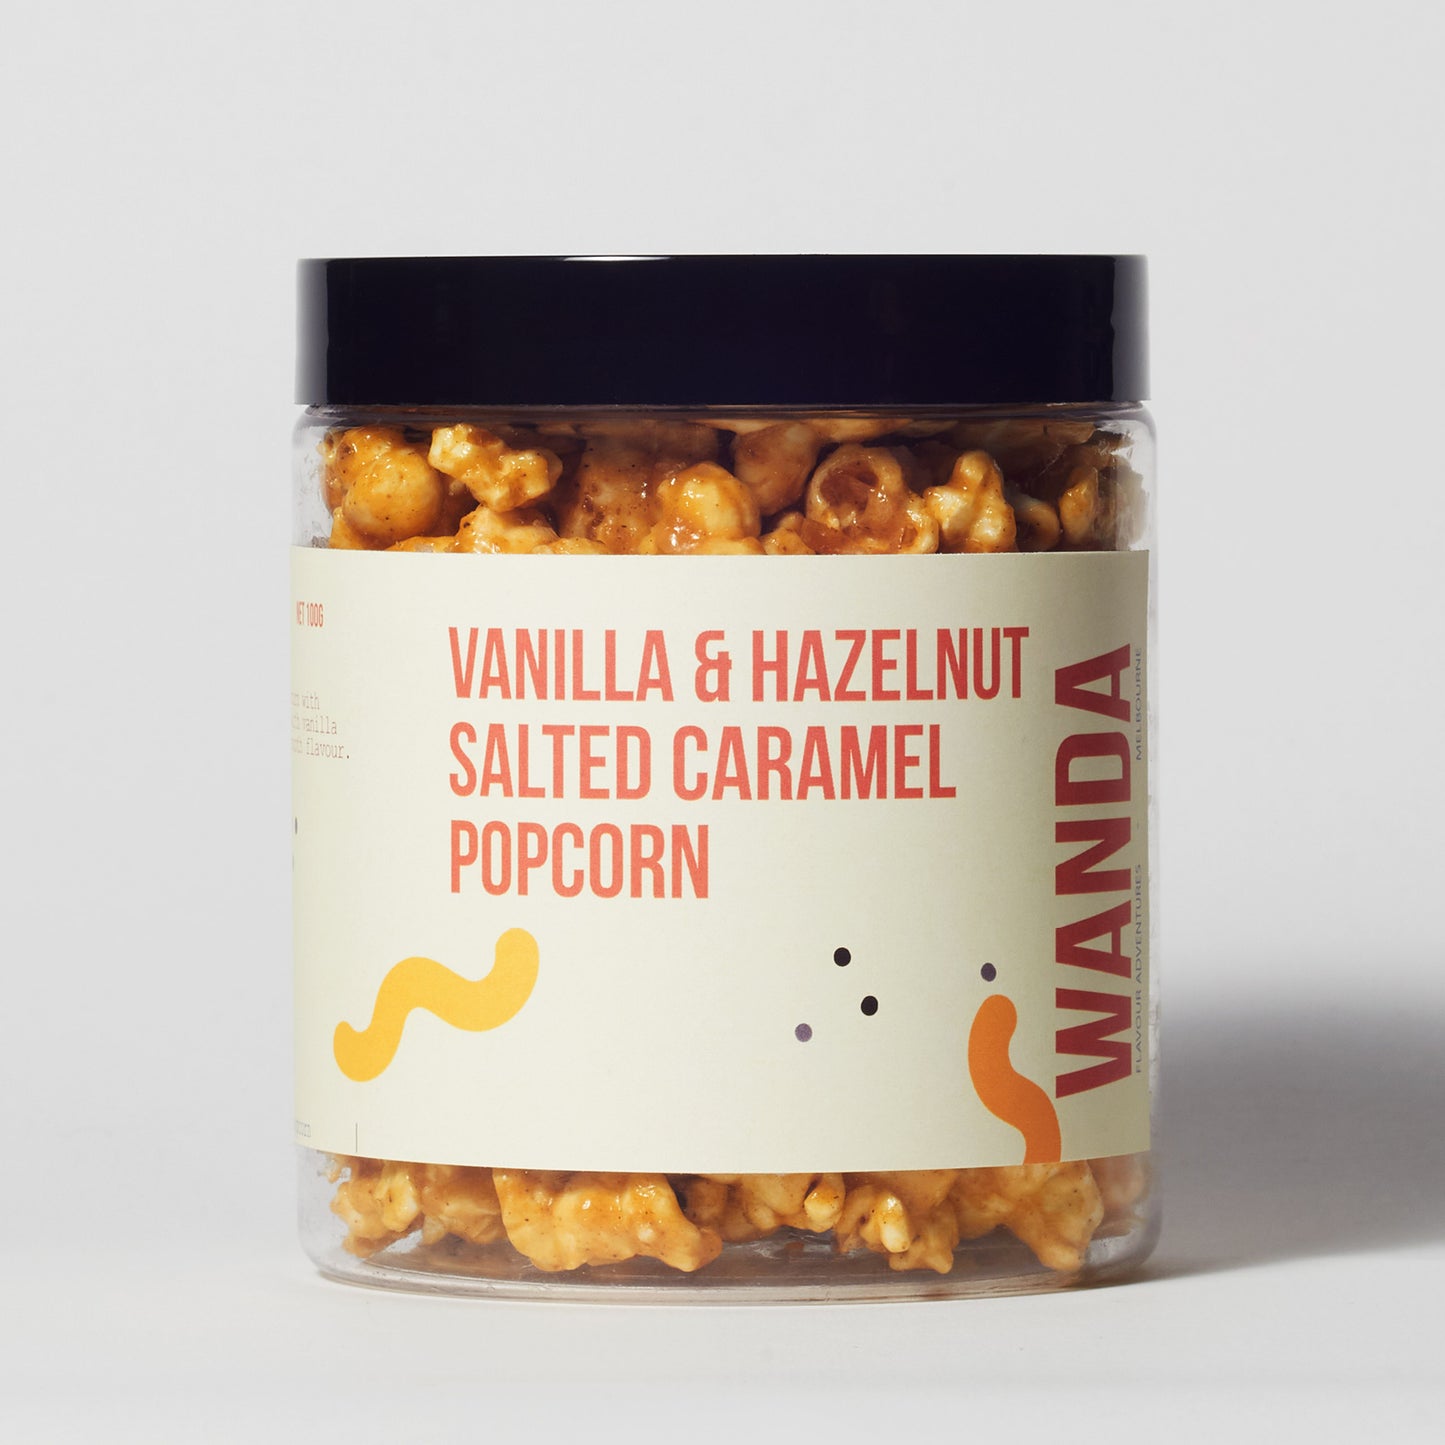 Wanda Vanilla & Hazelnut Salted Caramel Popcorn